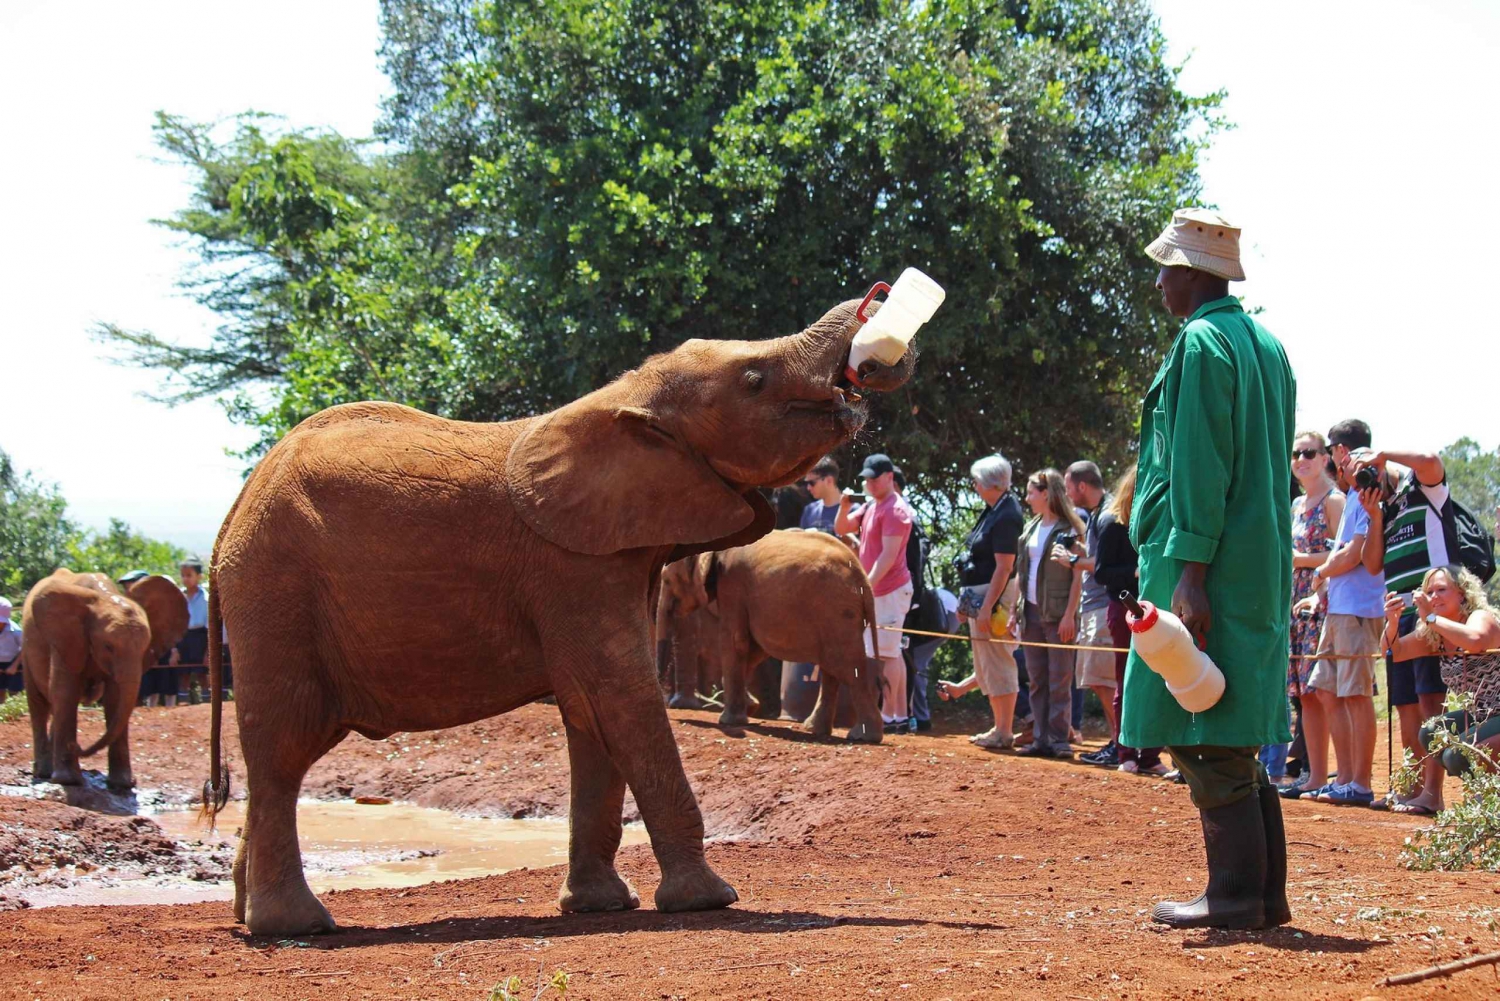 Nairobi: David Sheldrick Elephant Orphanage with Transfers